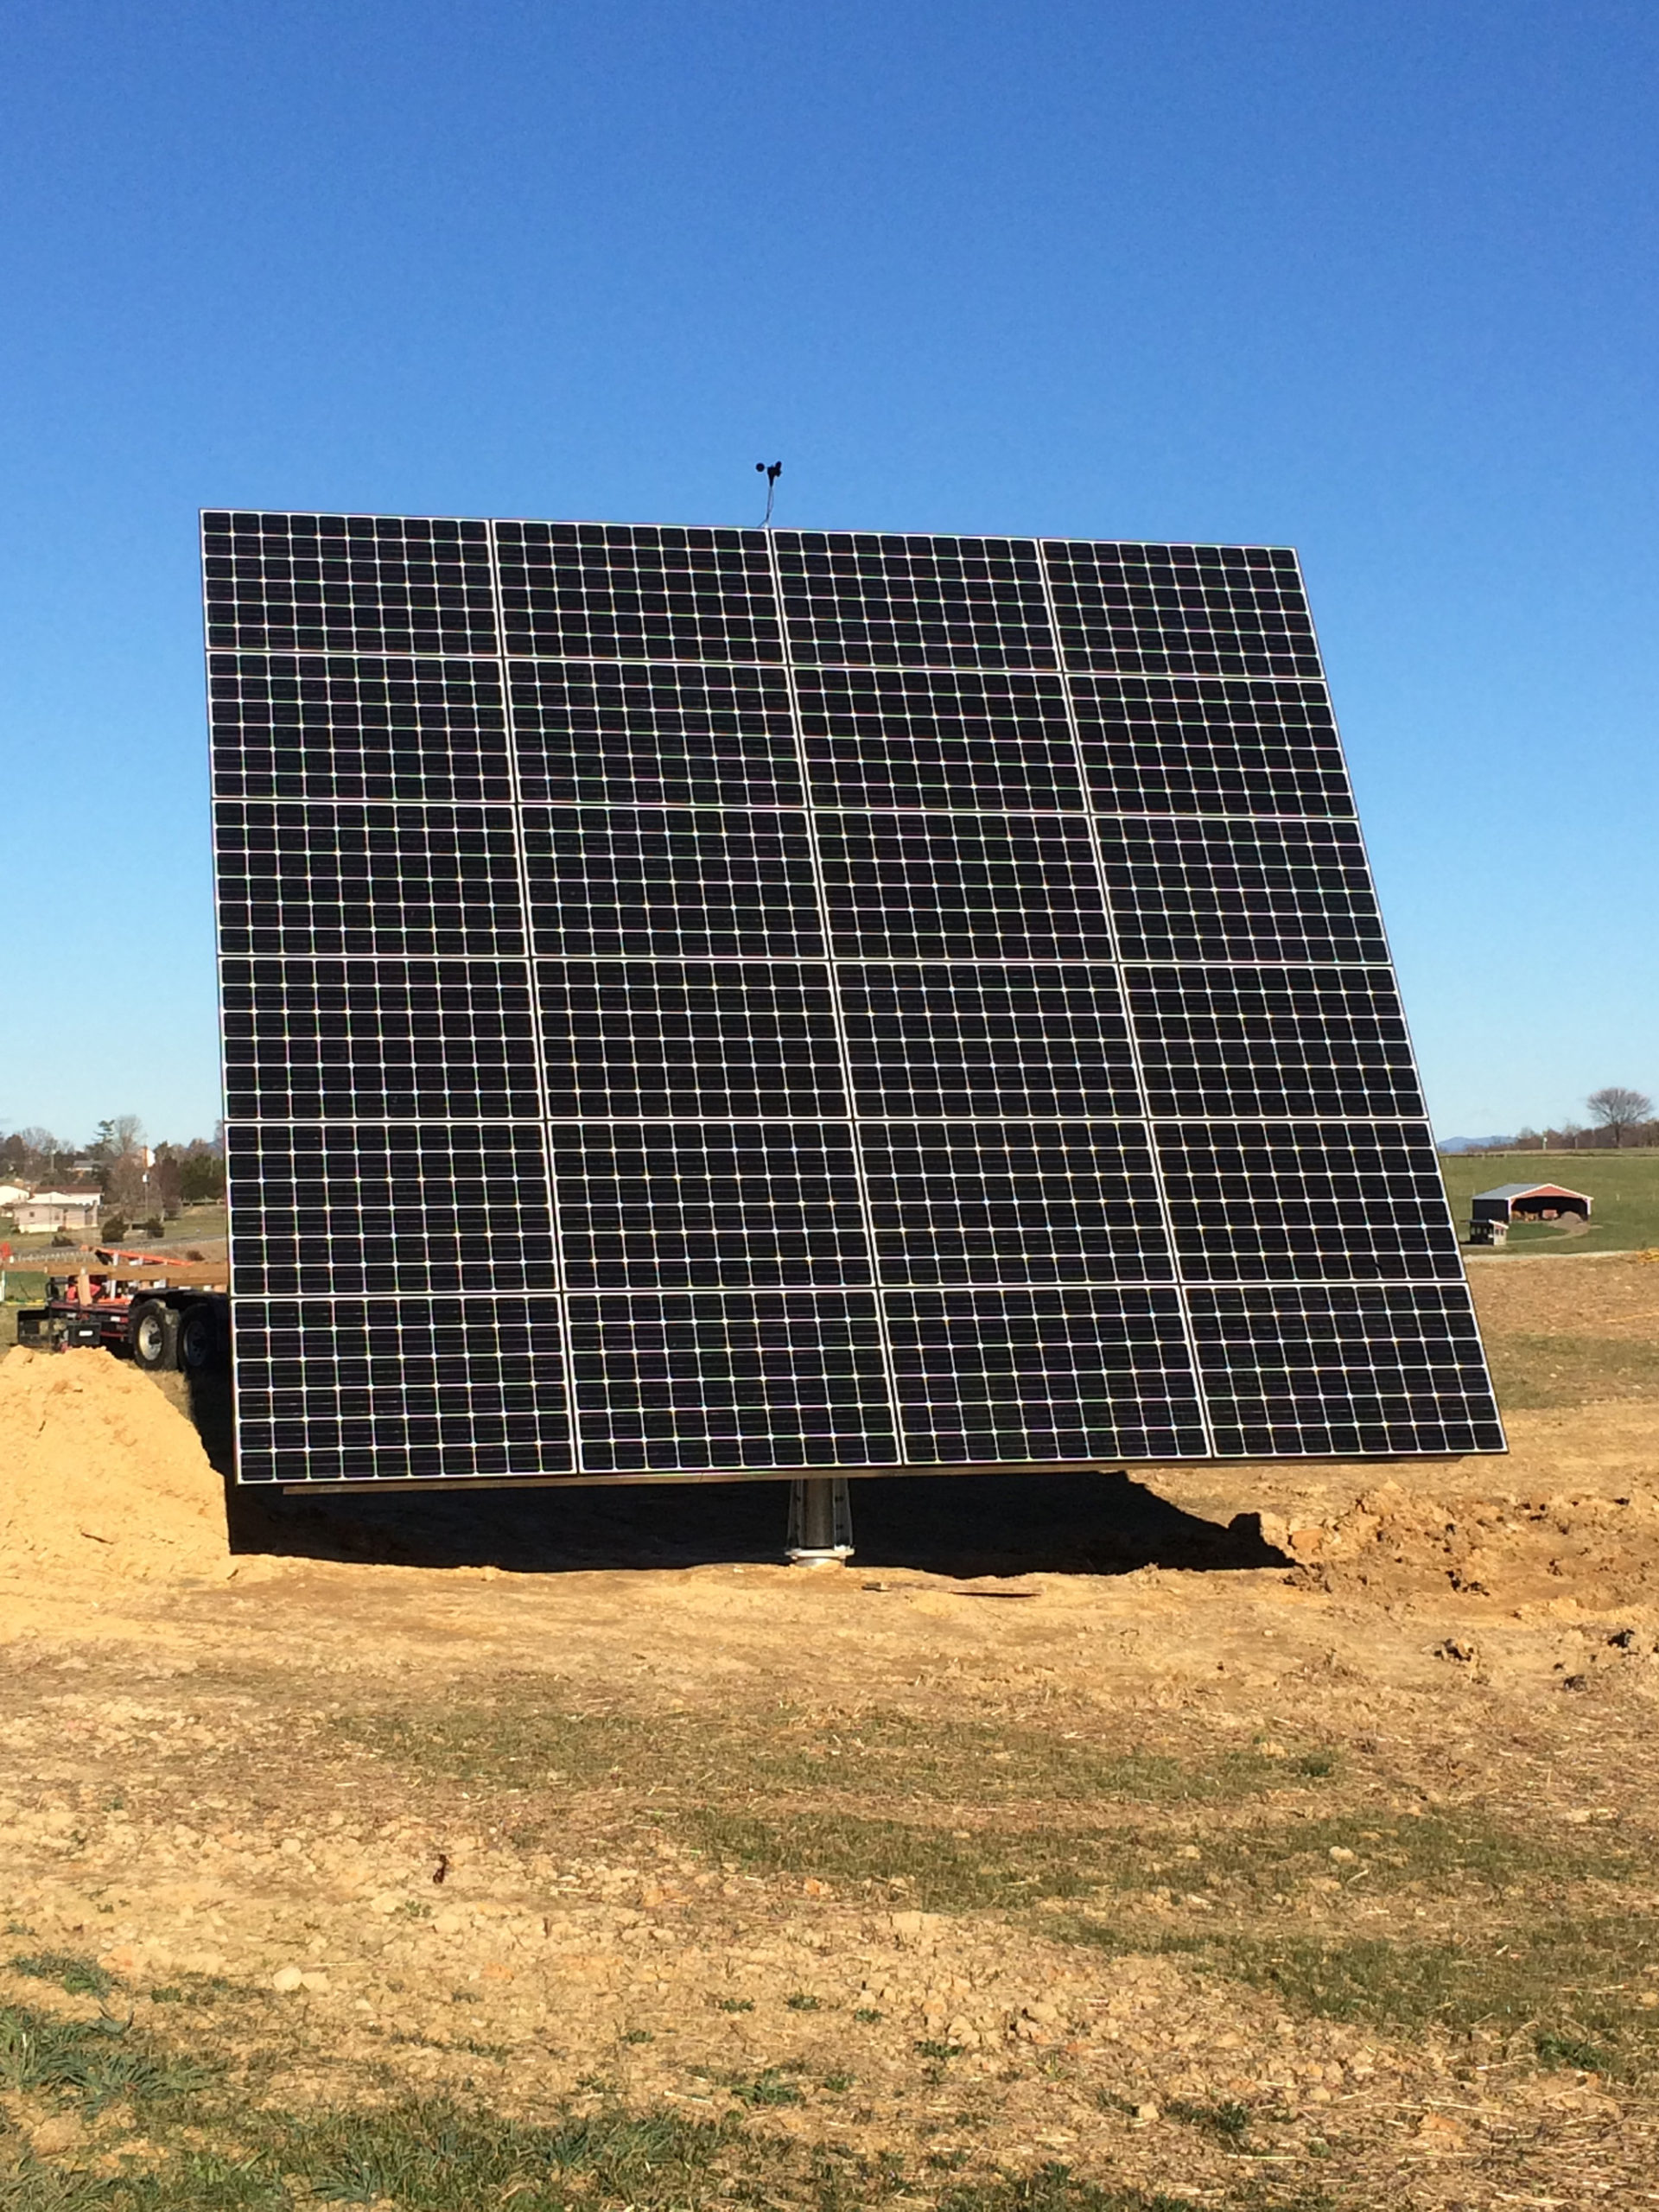 Singular solar panel in a field